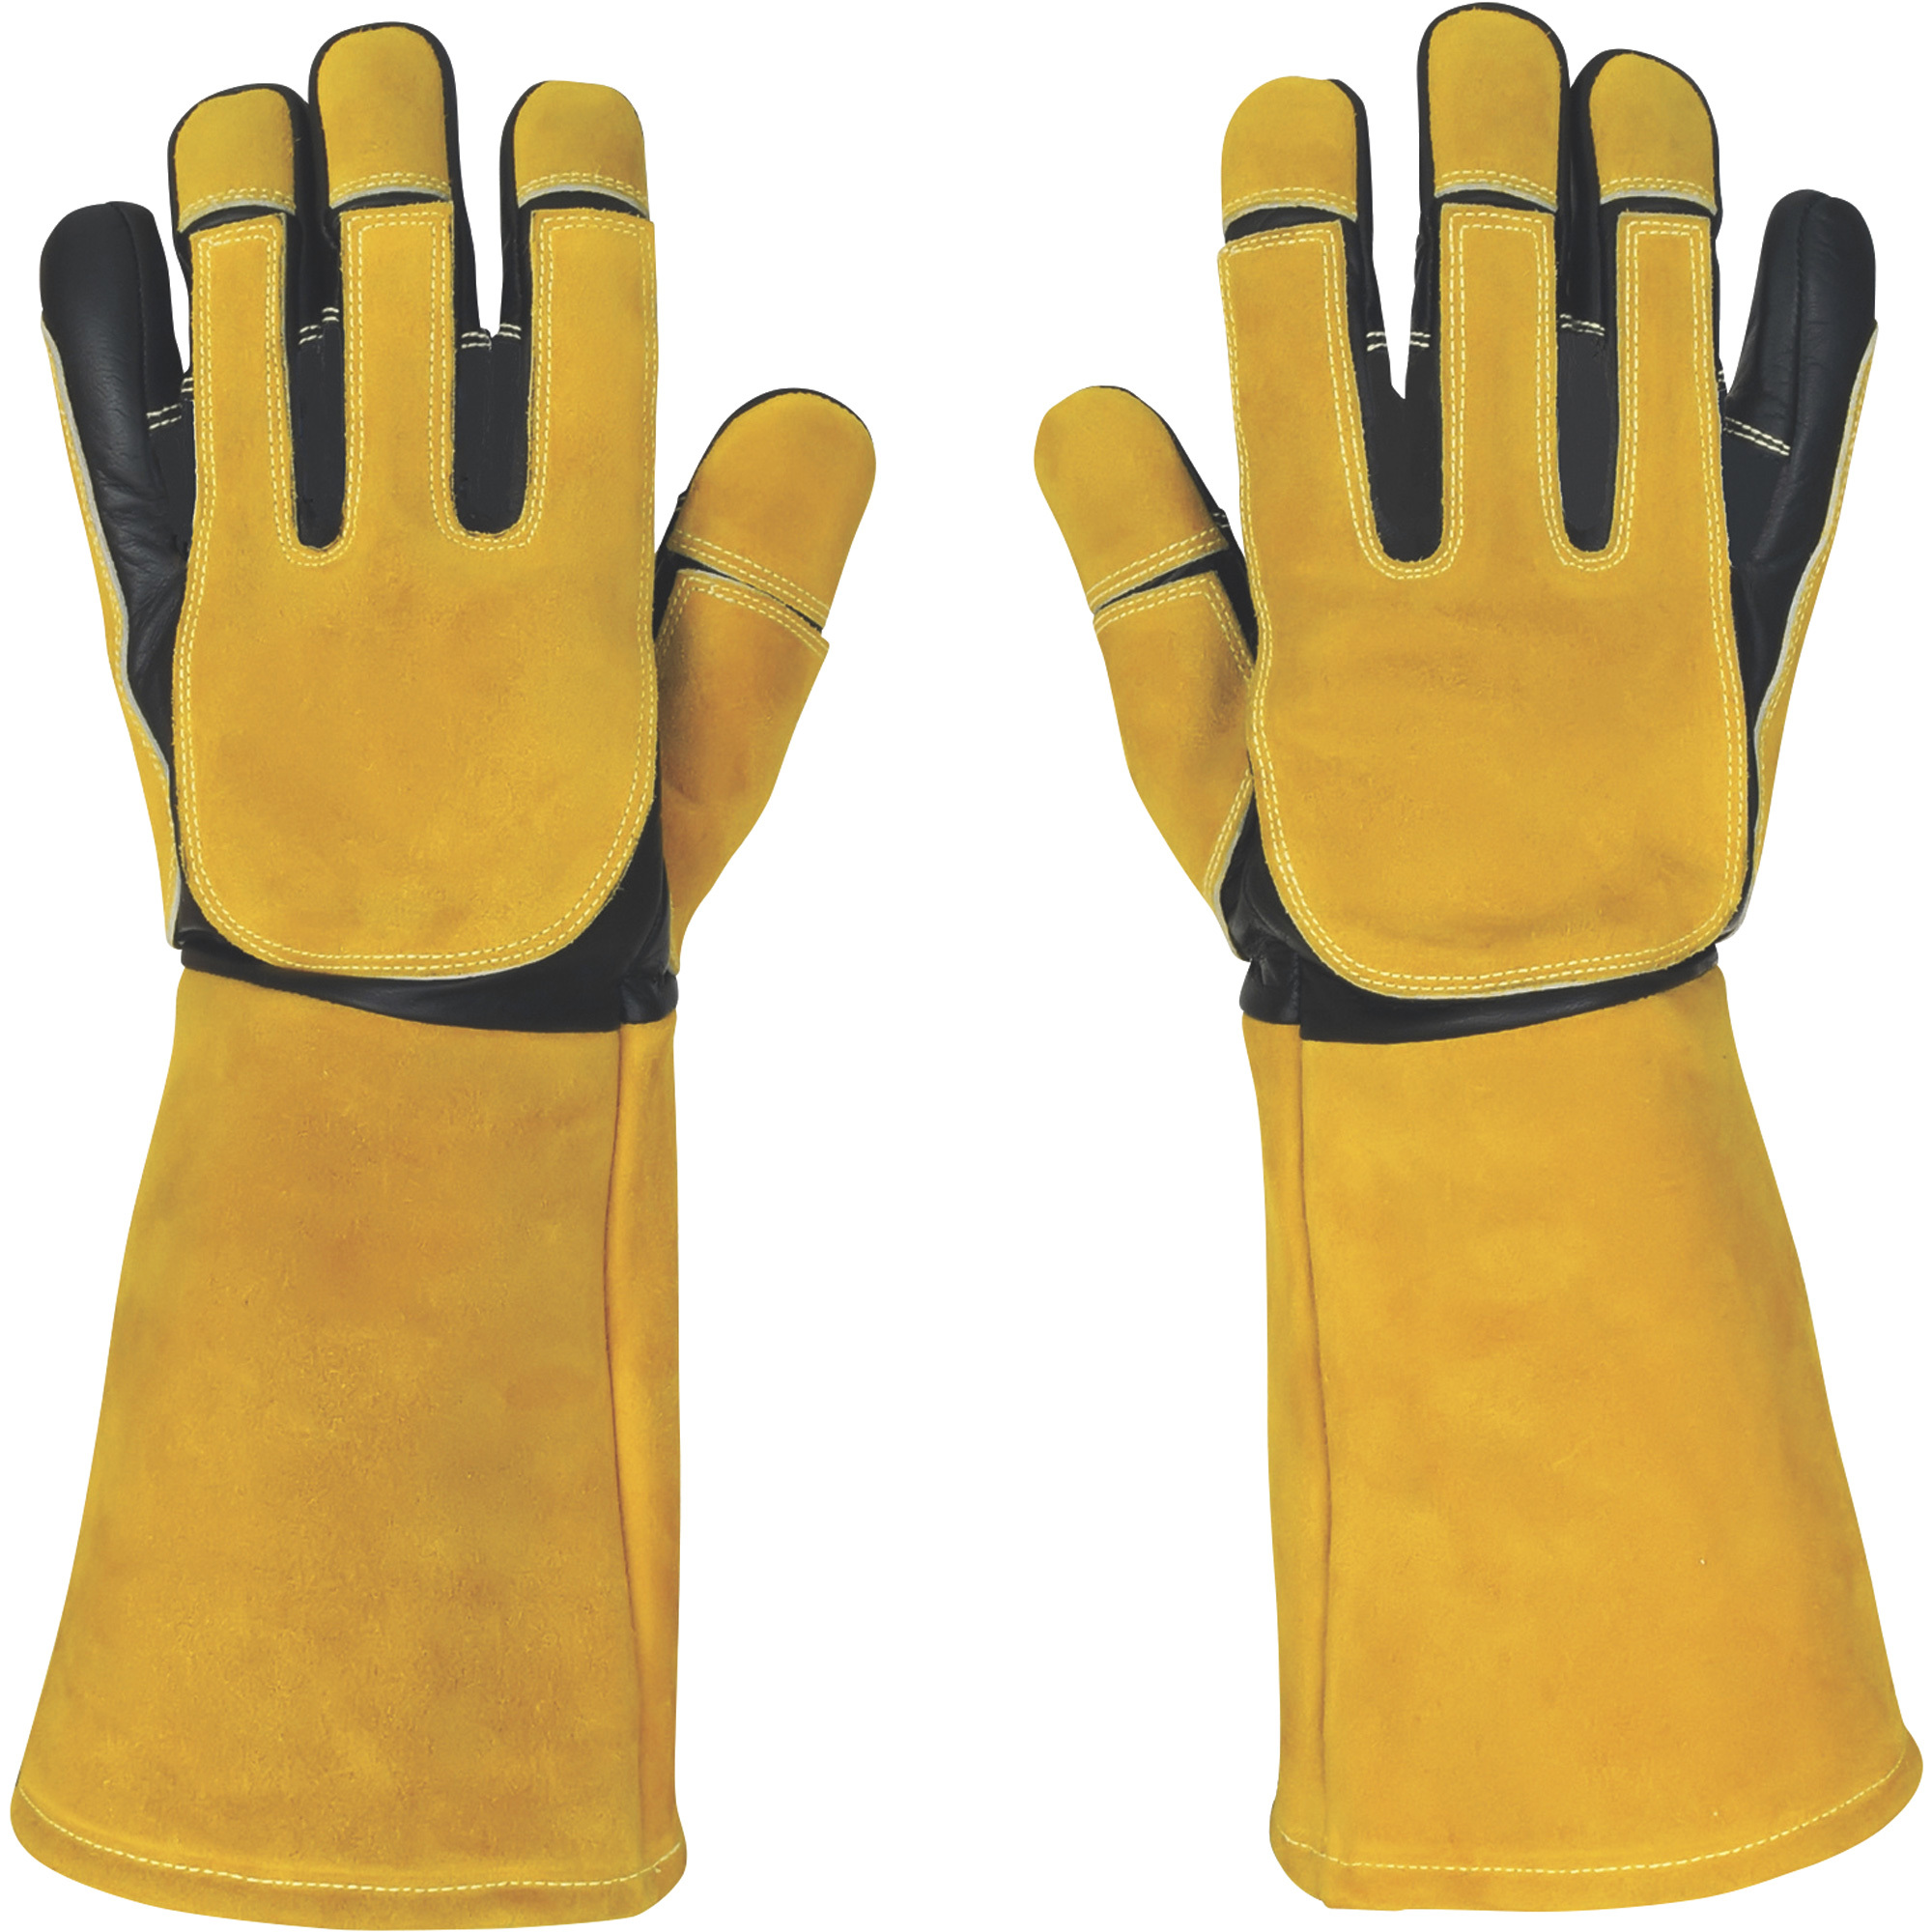 Klutch Cut-Resistant Goatskin/Cowhide MIG Welding Gloves â Single Pair, Gold/Black, Large